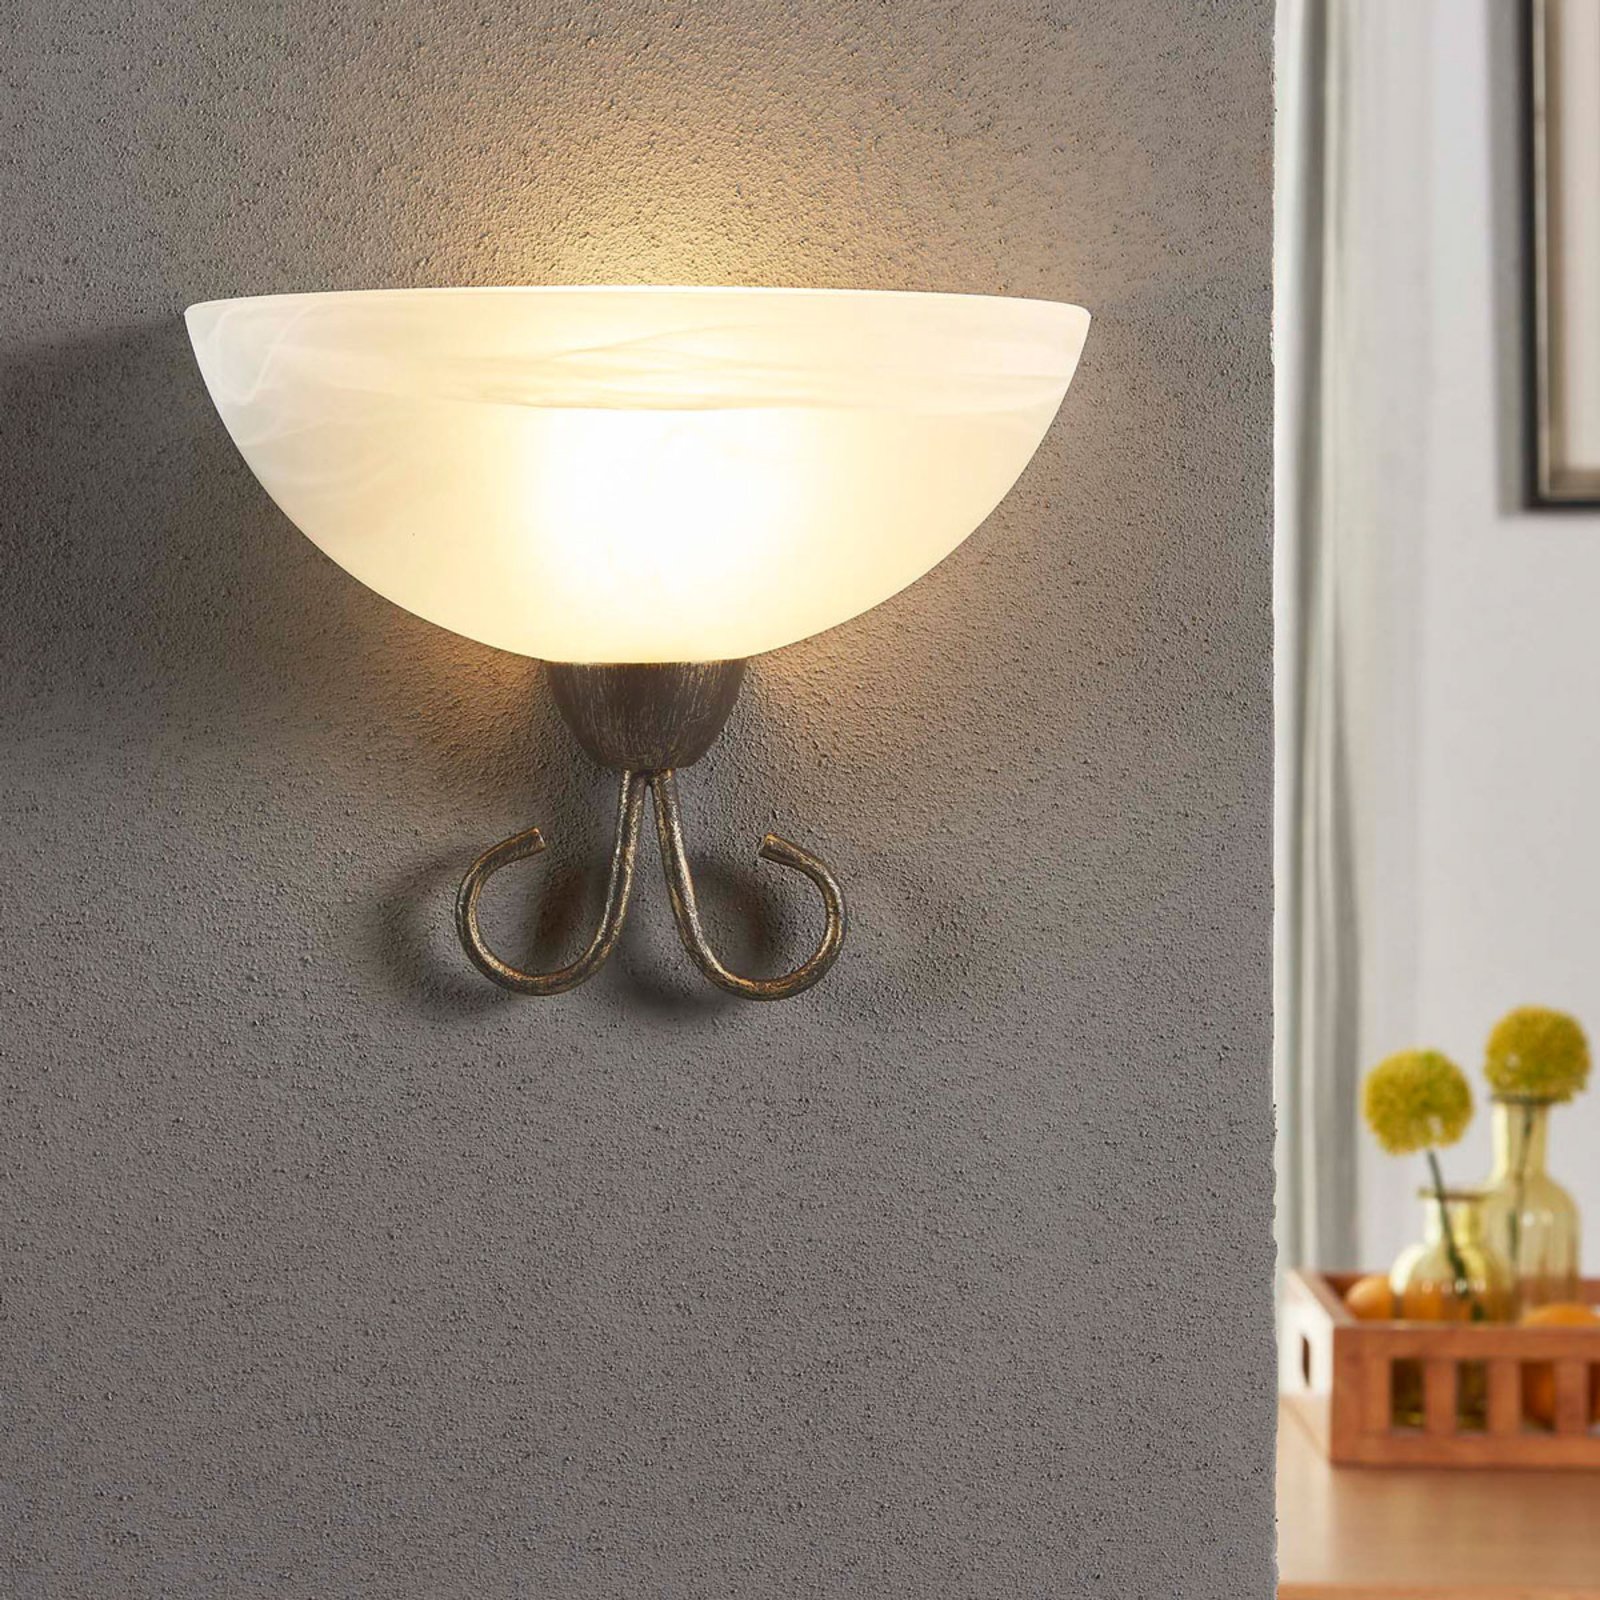 Attractive wall lamp Castila